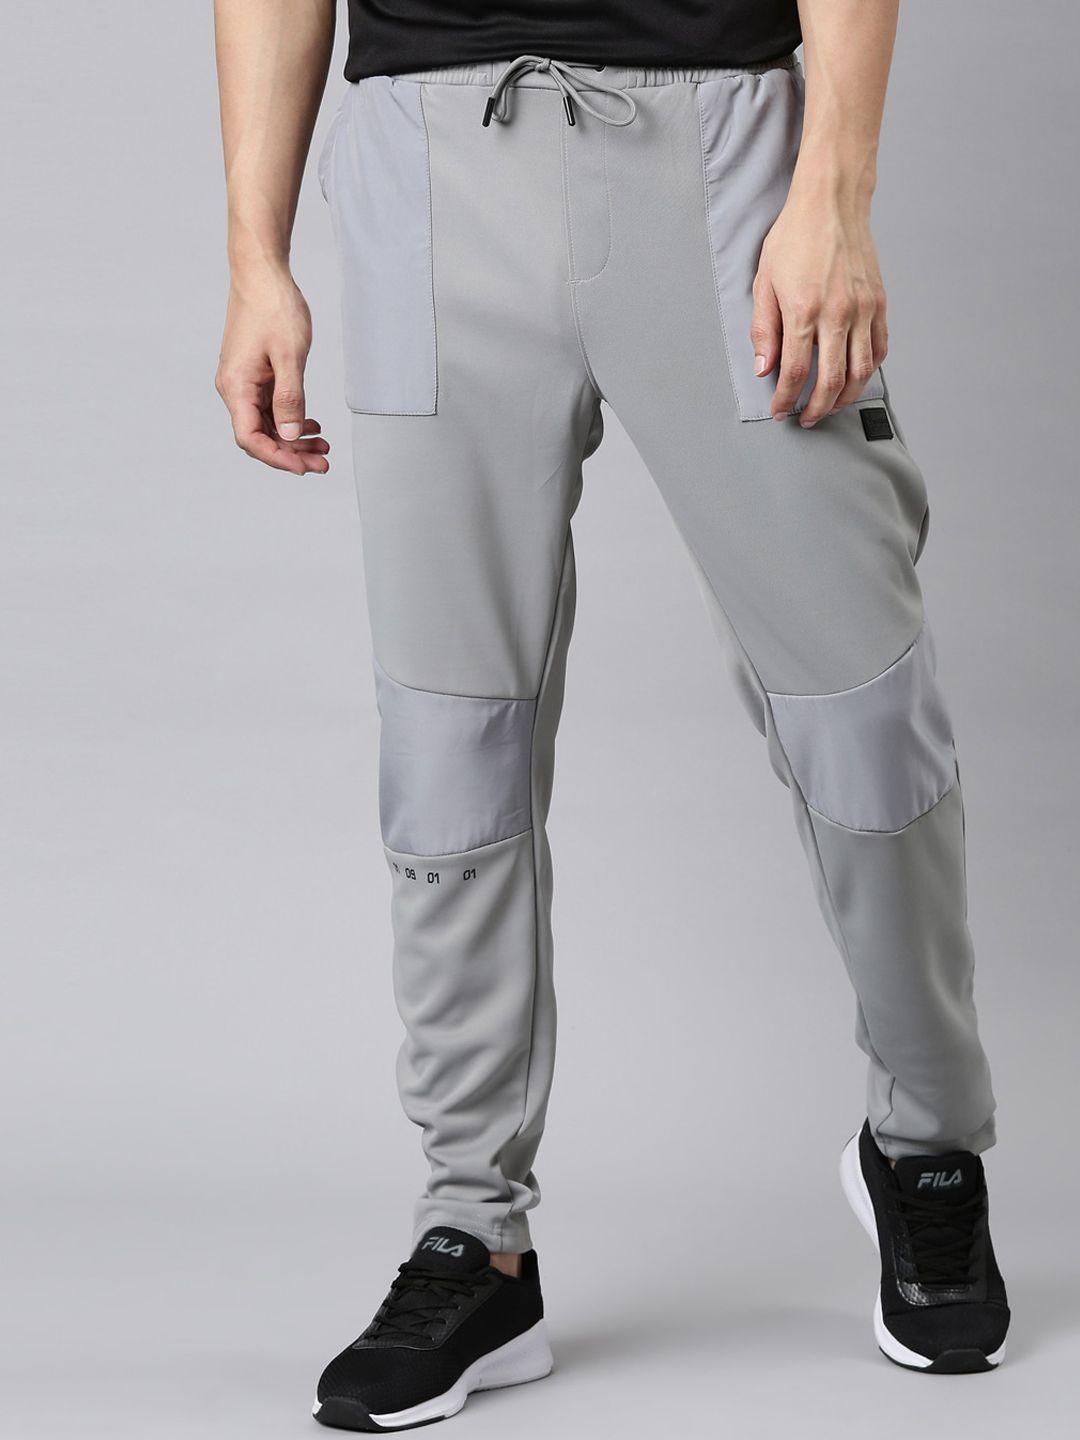 fila-men-grey-solid-track-drawstring-pants